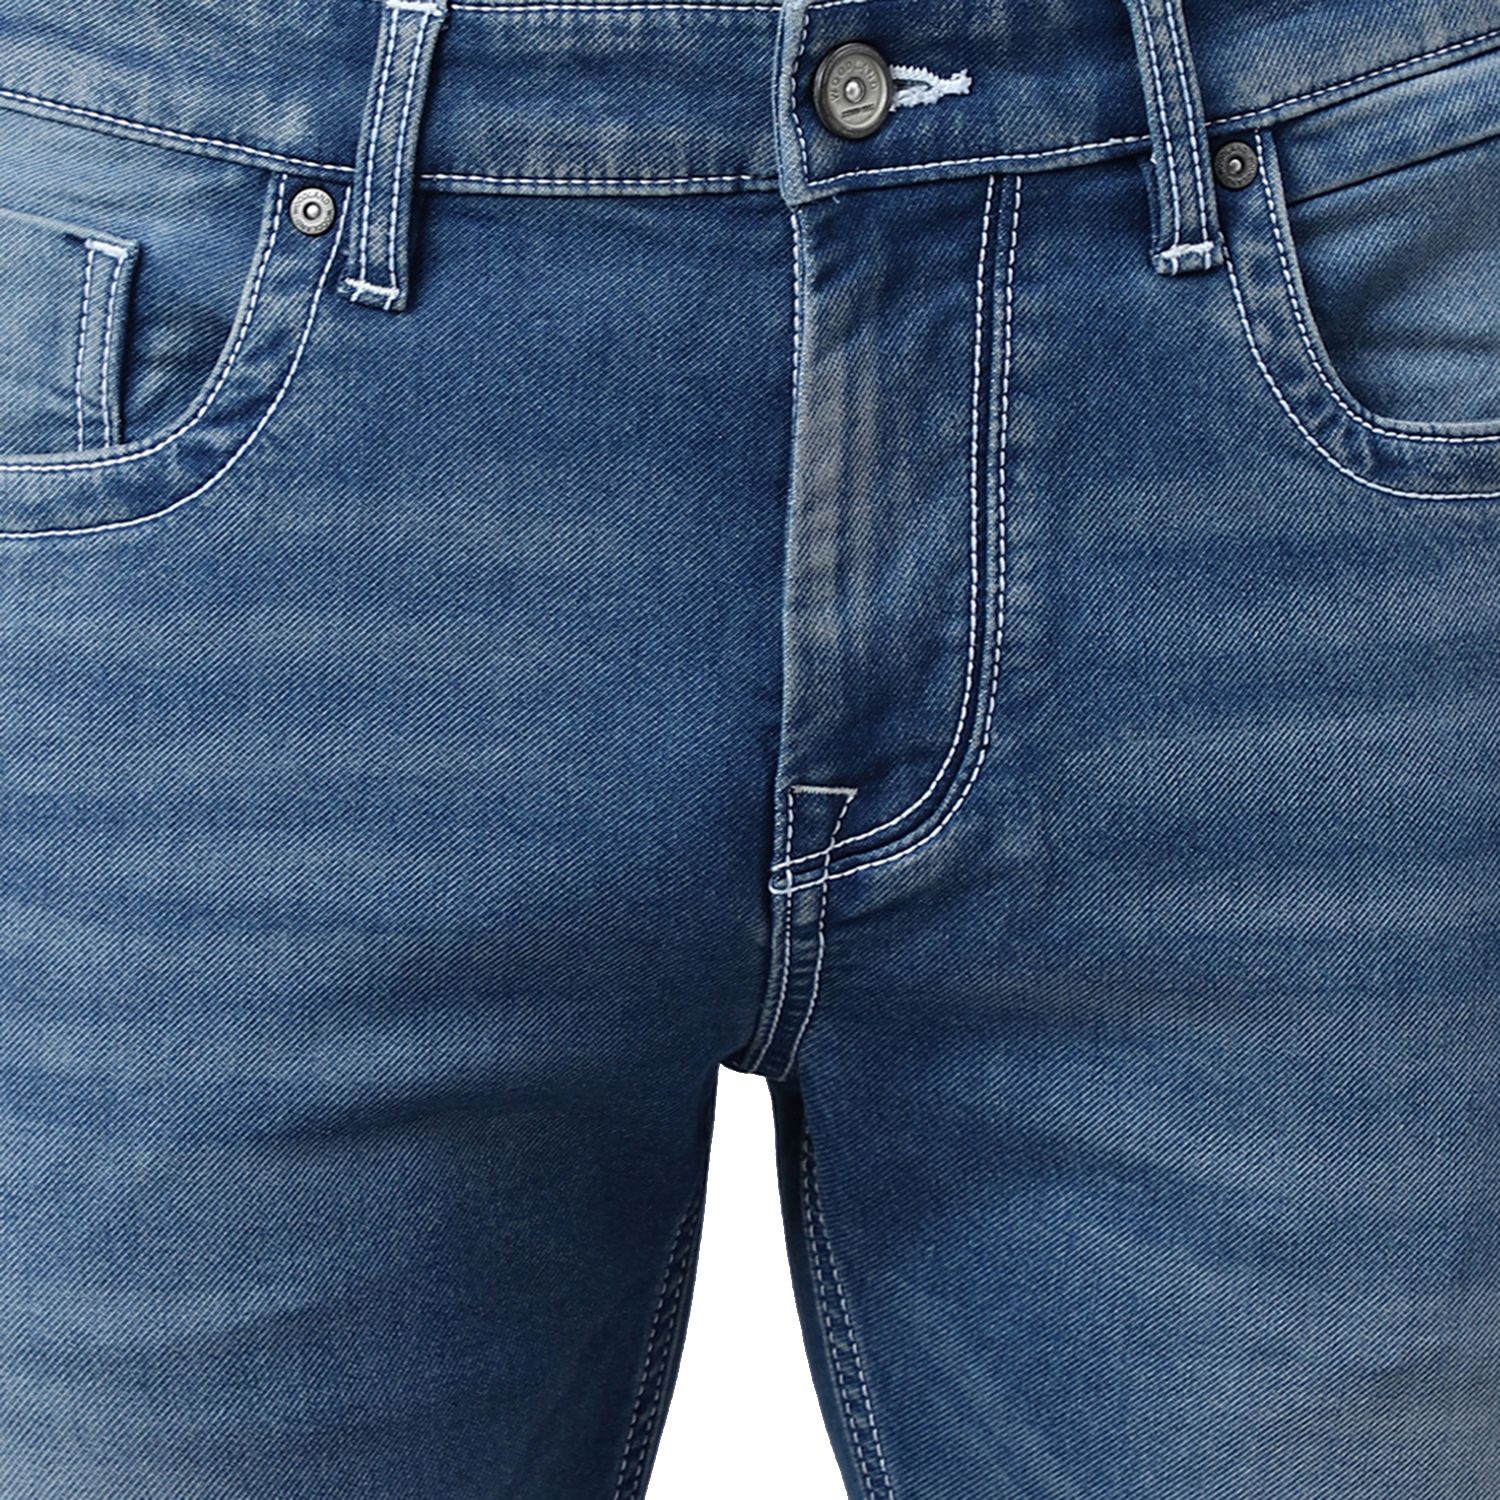 Mblue Jeans for men